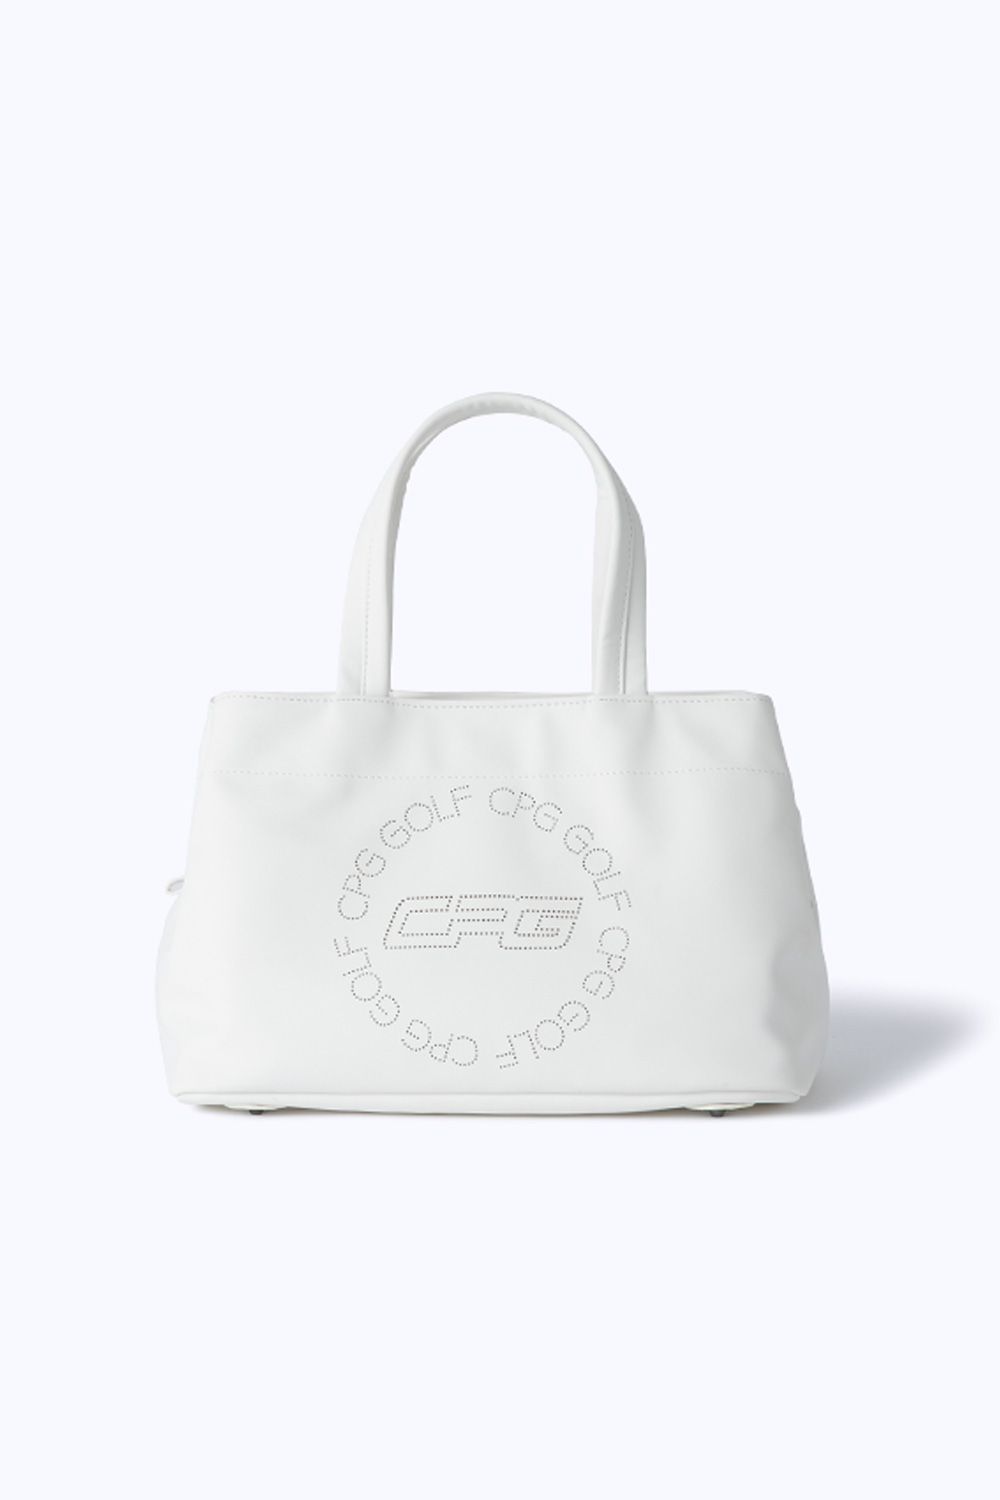 CPG GOLF - PUNCHING LOGO MINI CART BAG / パンチング ロゴ MINI 